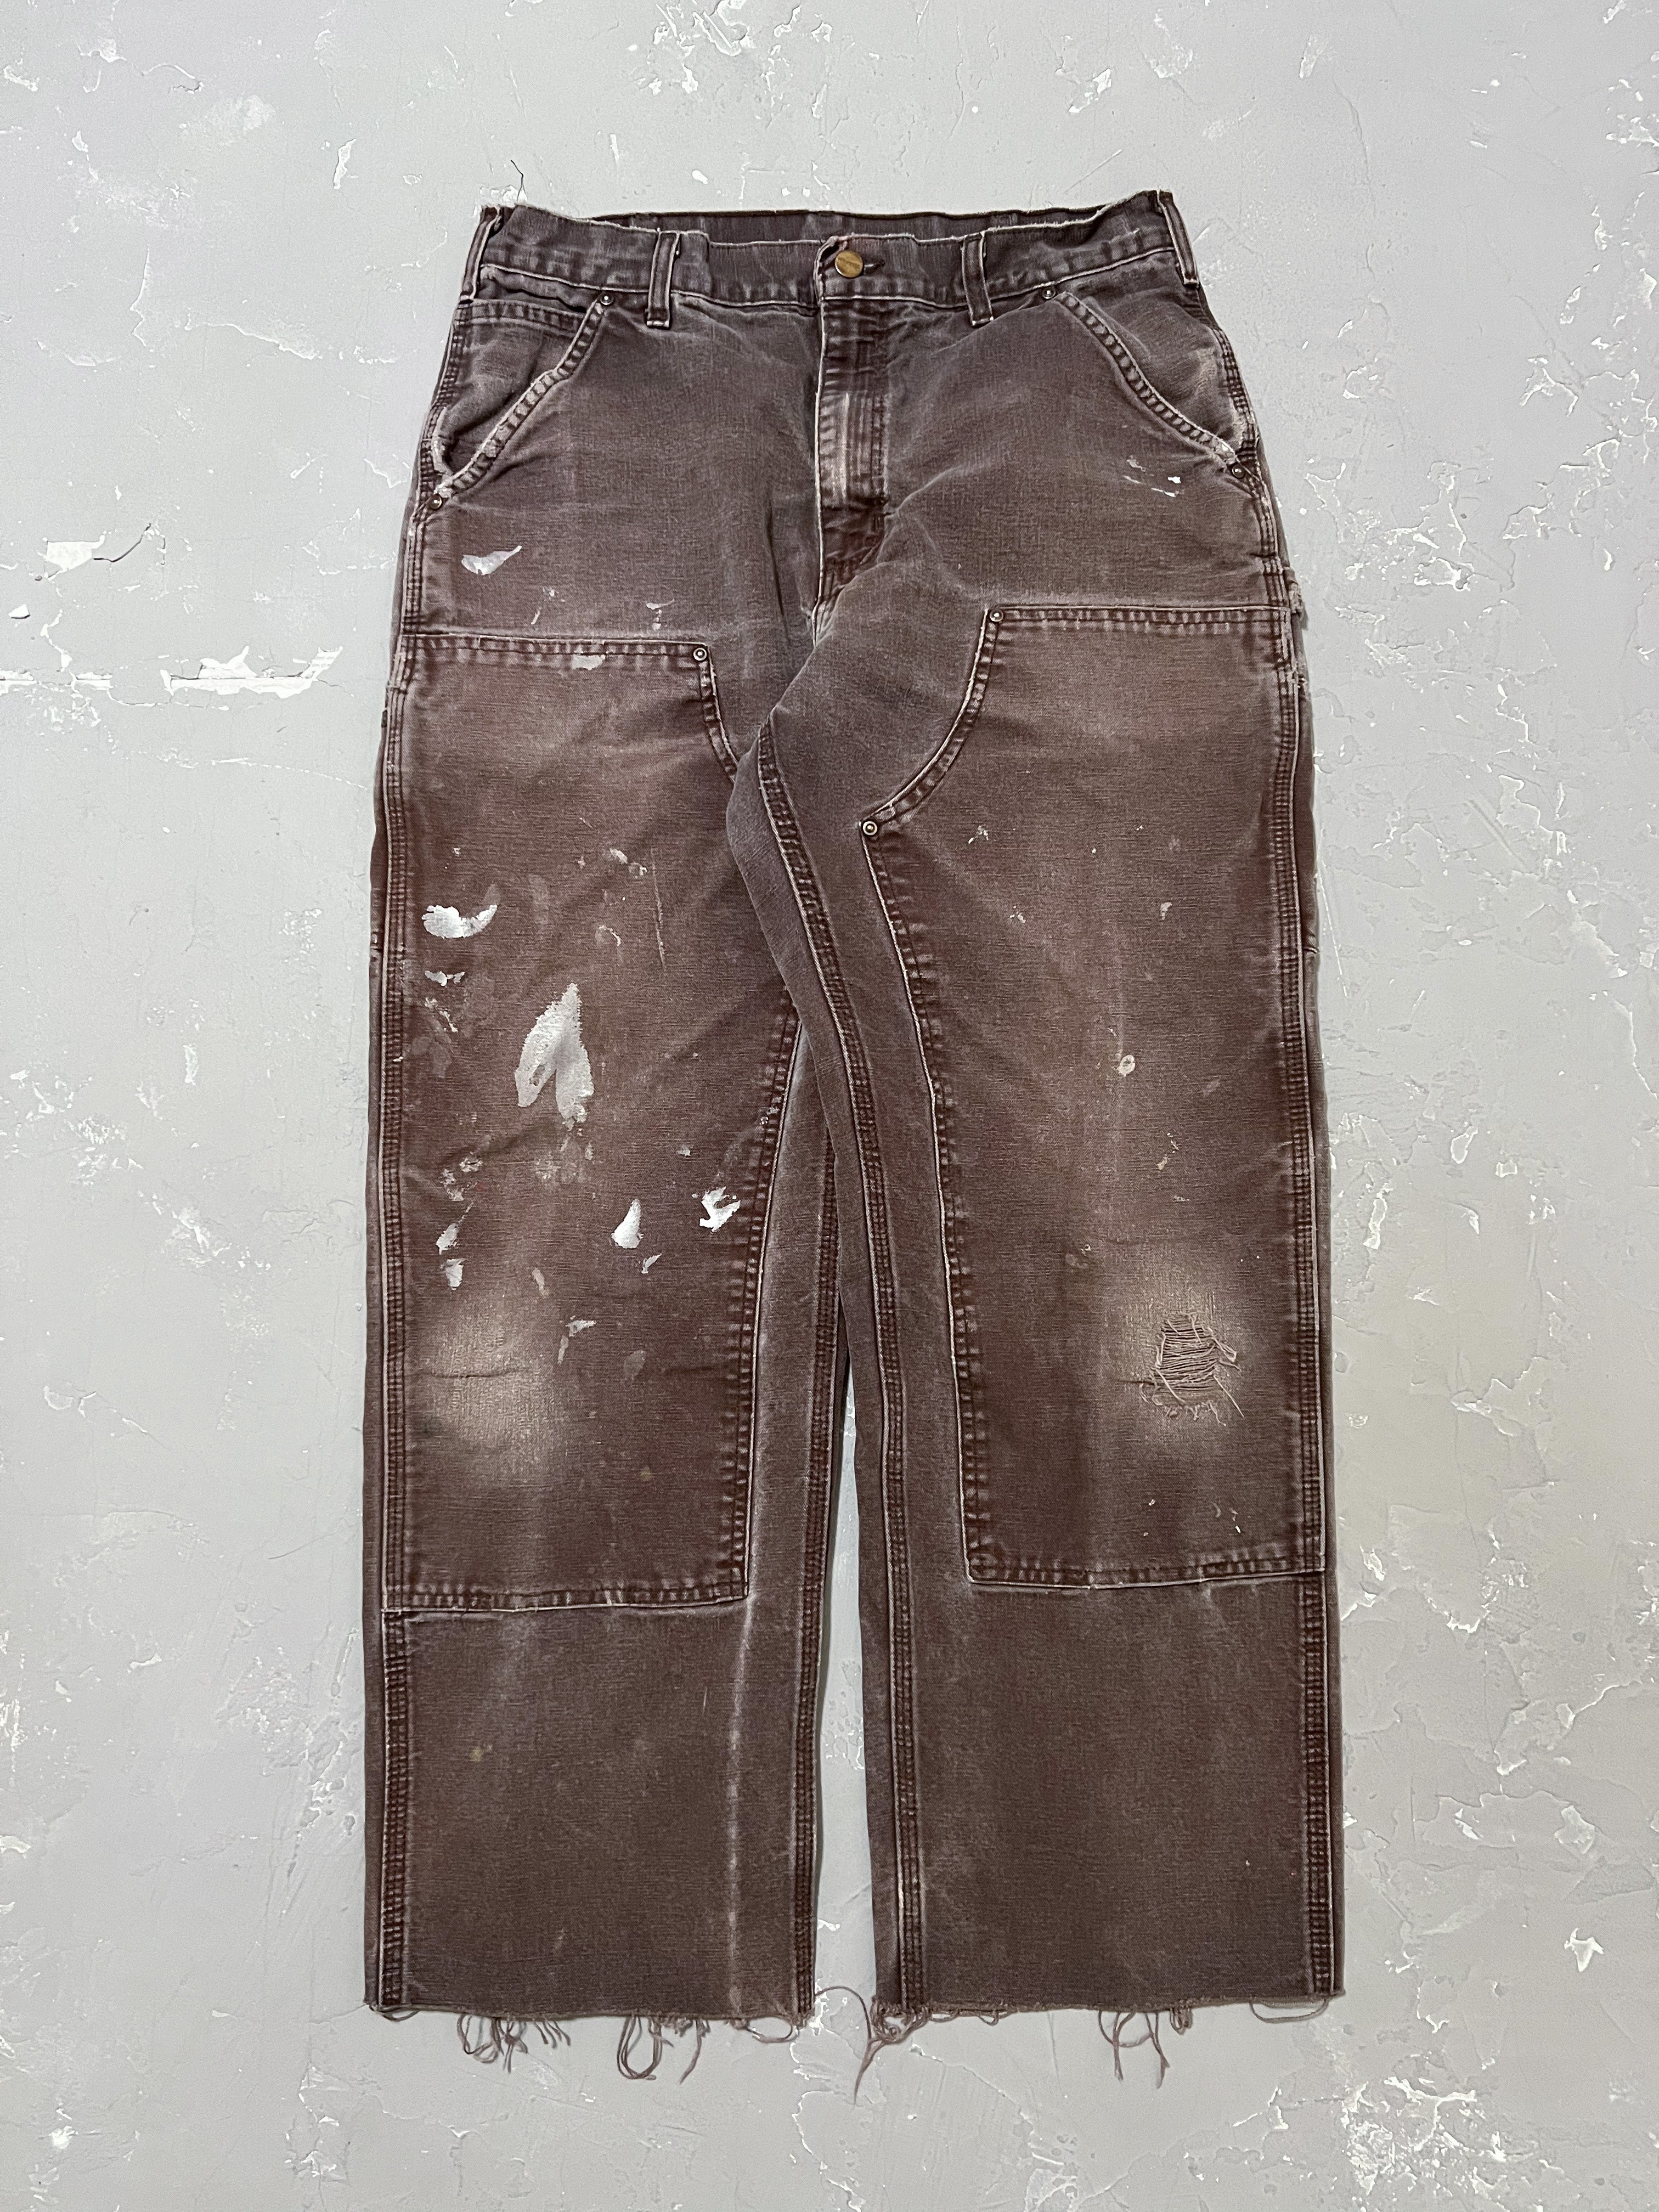 Carhartt Faded Mocha Painted Double Knee Pants [33 x 30]